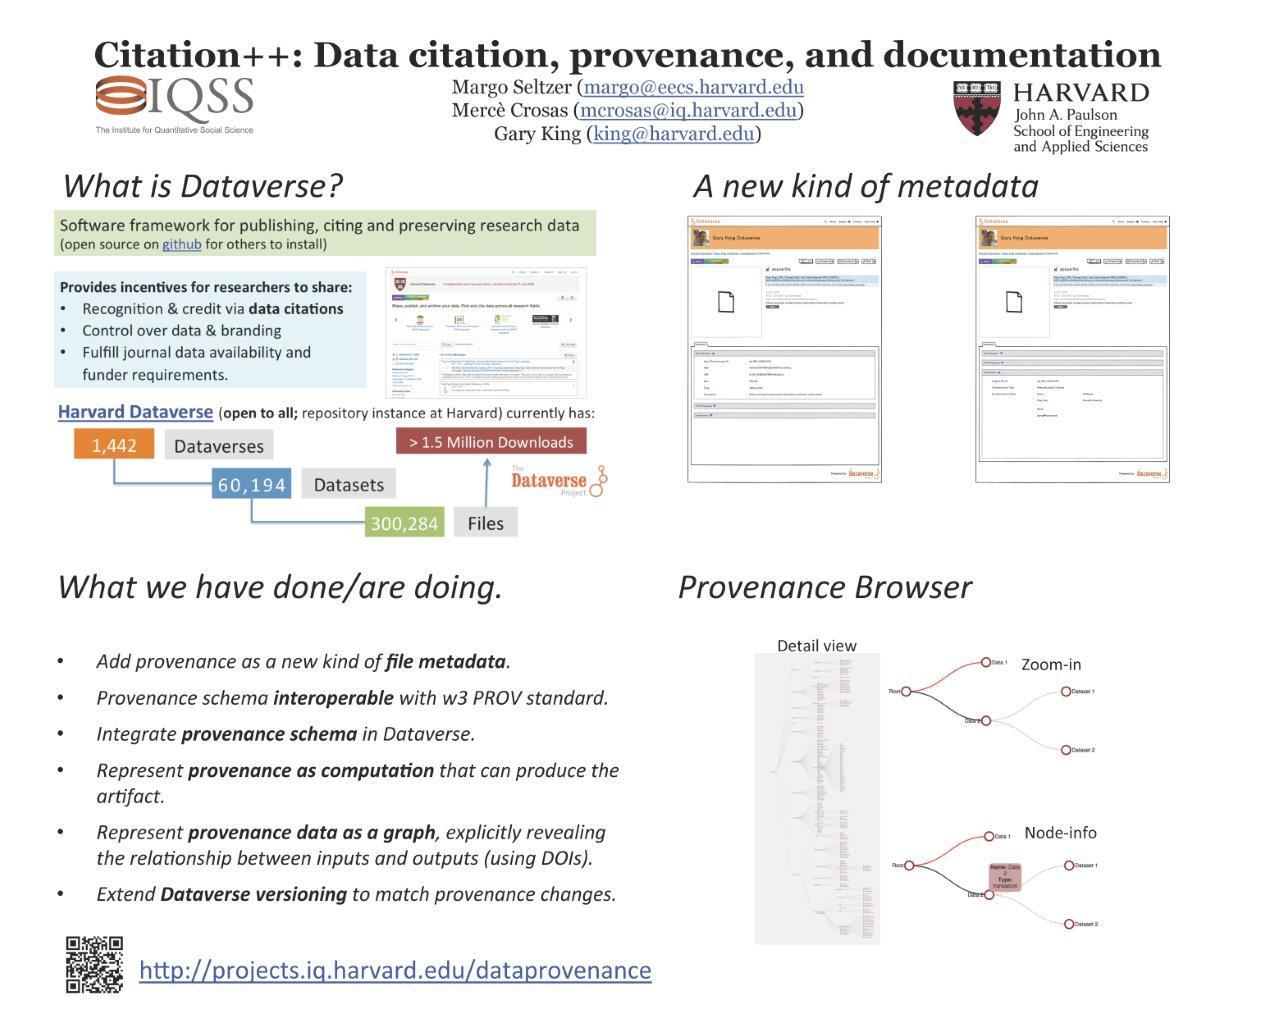 Citation ++: Data citation, provenance and documentation